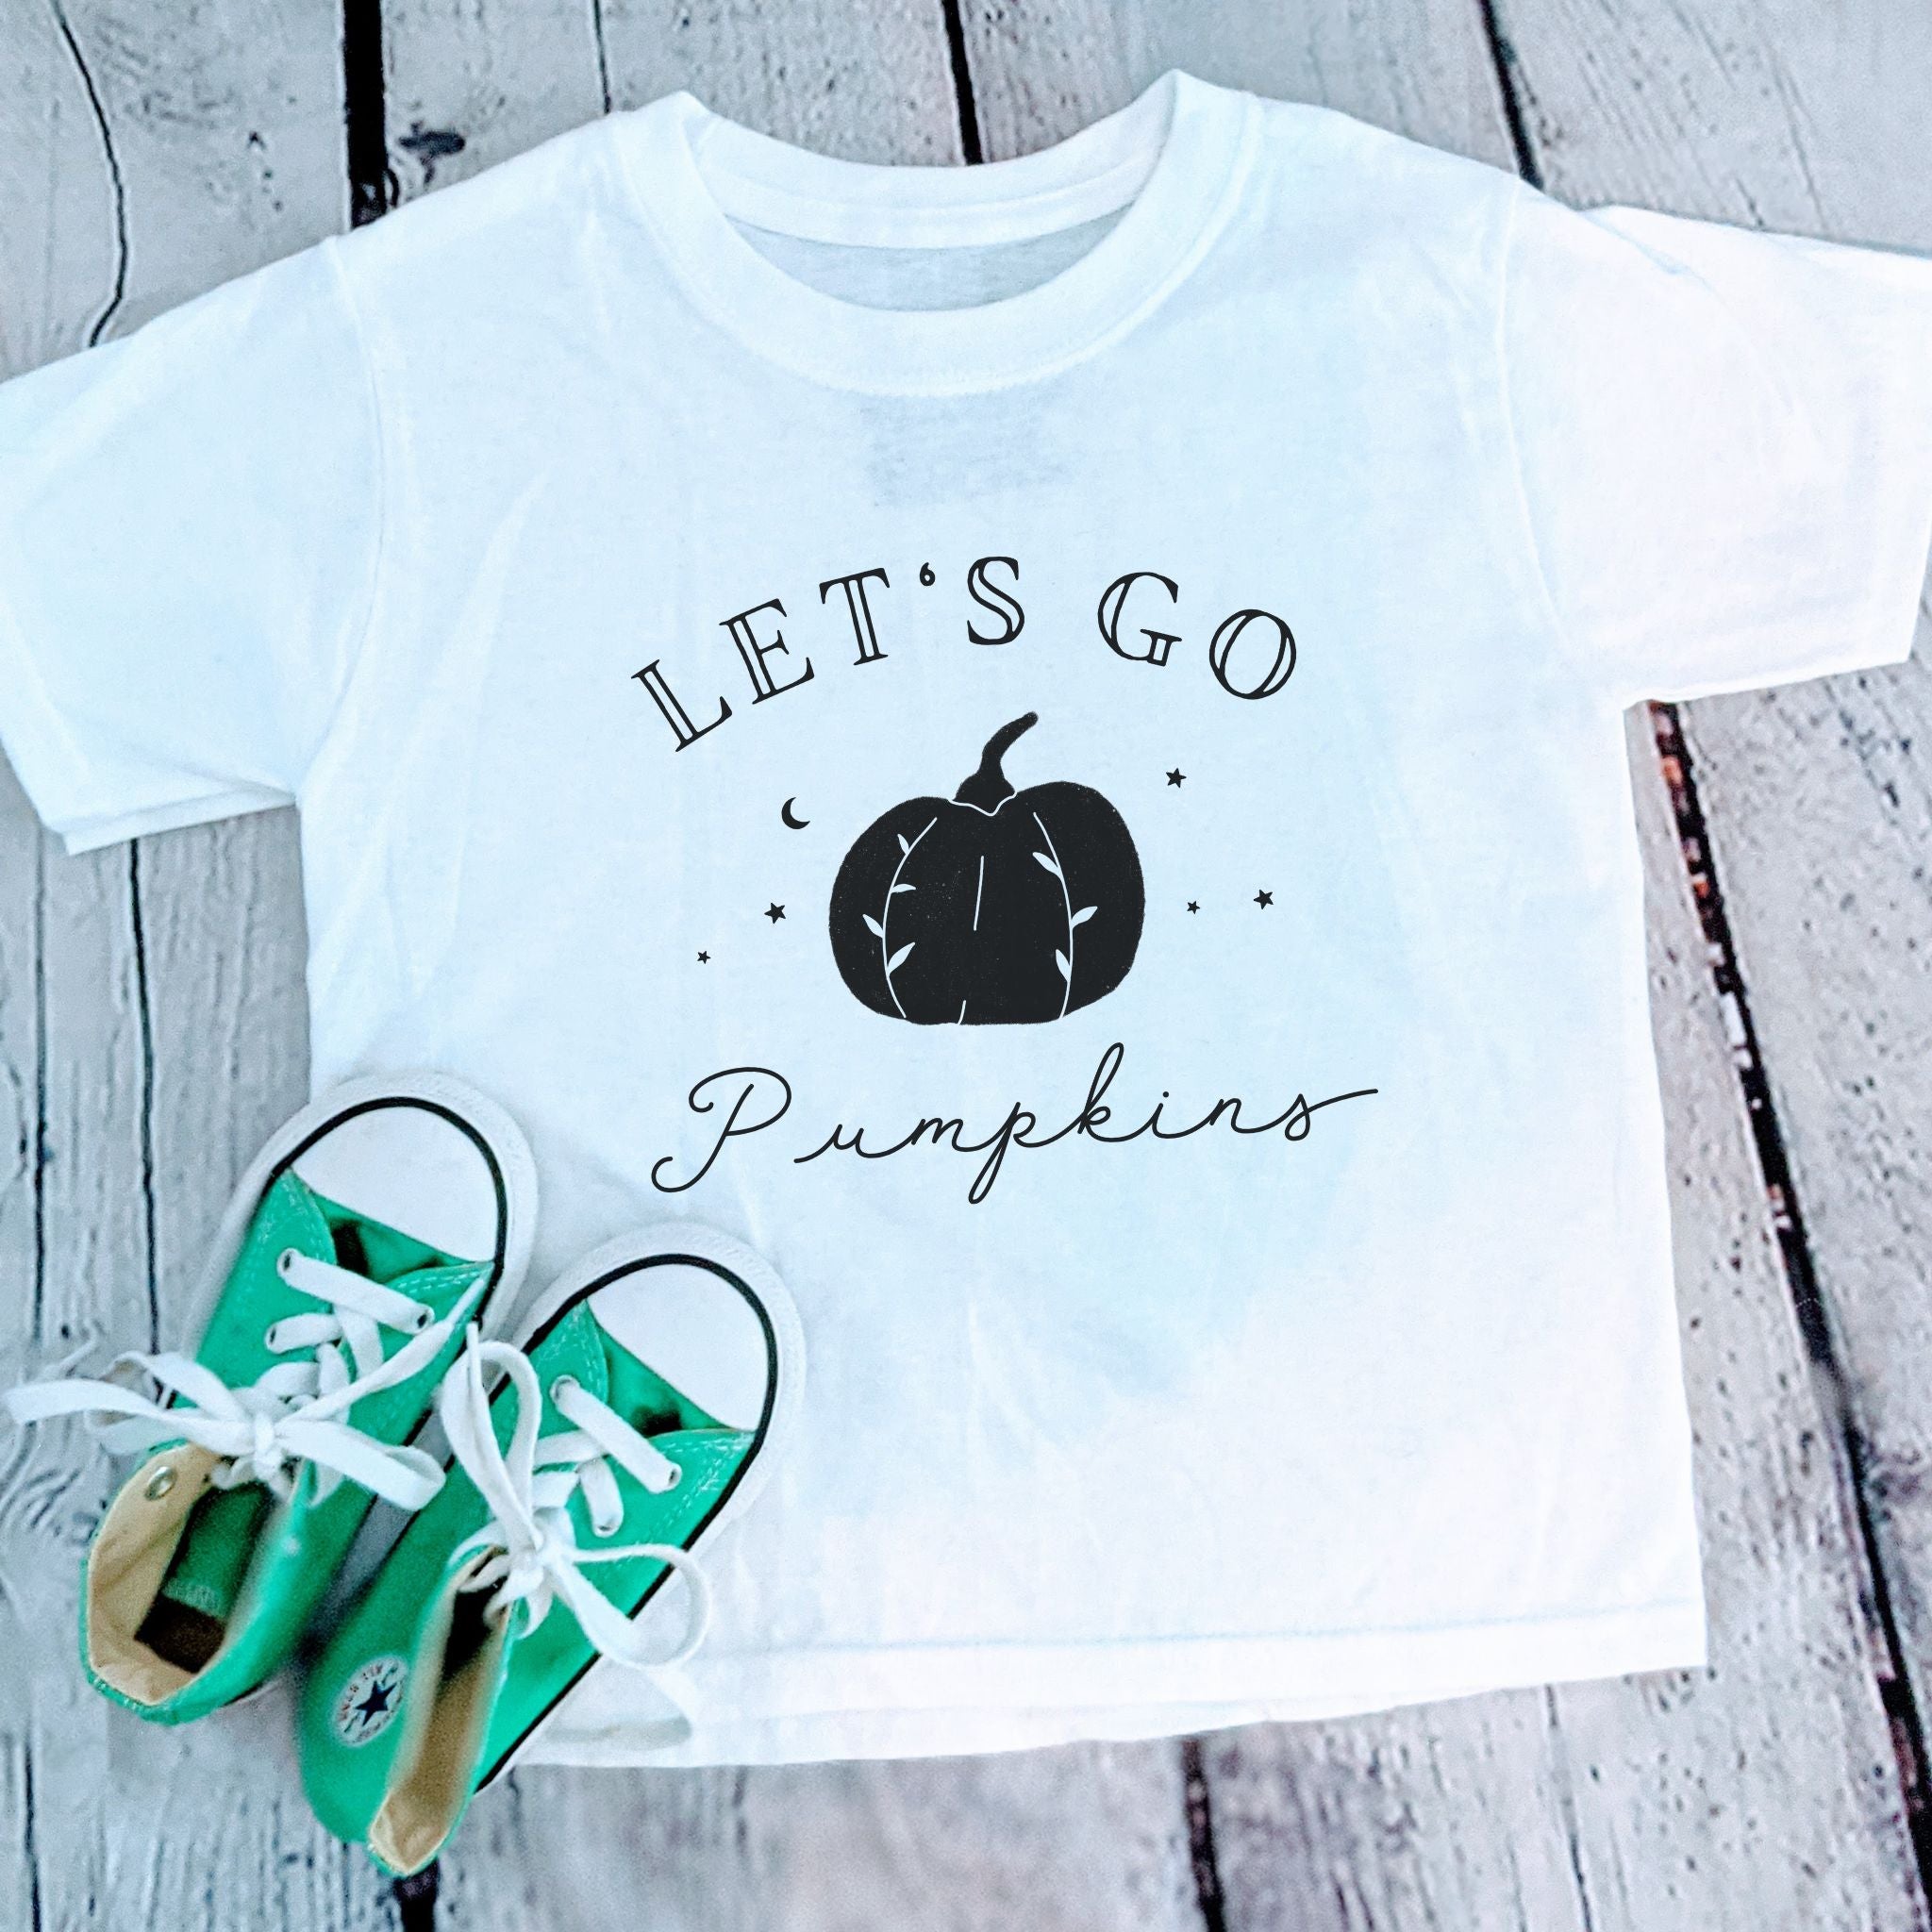 Let's Go Pumpkins - Toddler Short Sleeve Tee - The Small Art Project - Modern Nursery Prints